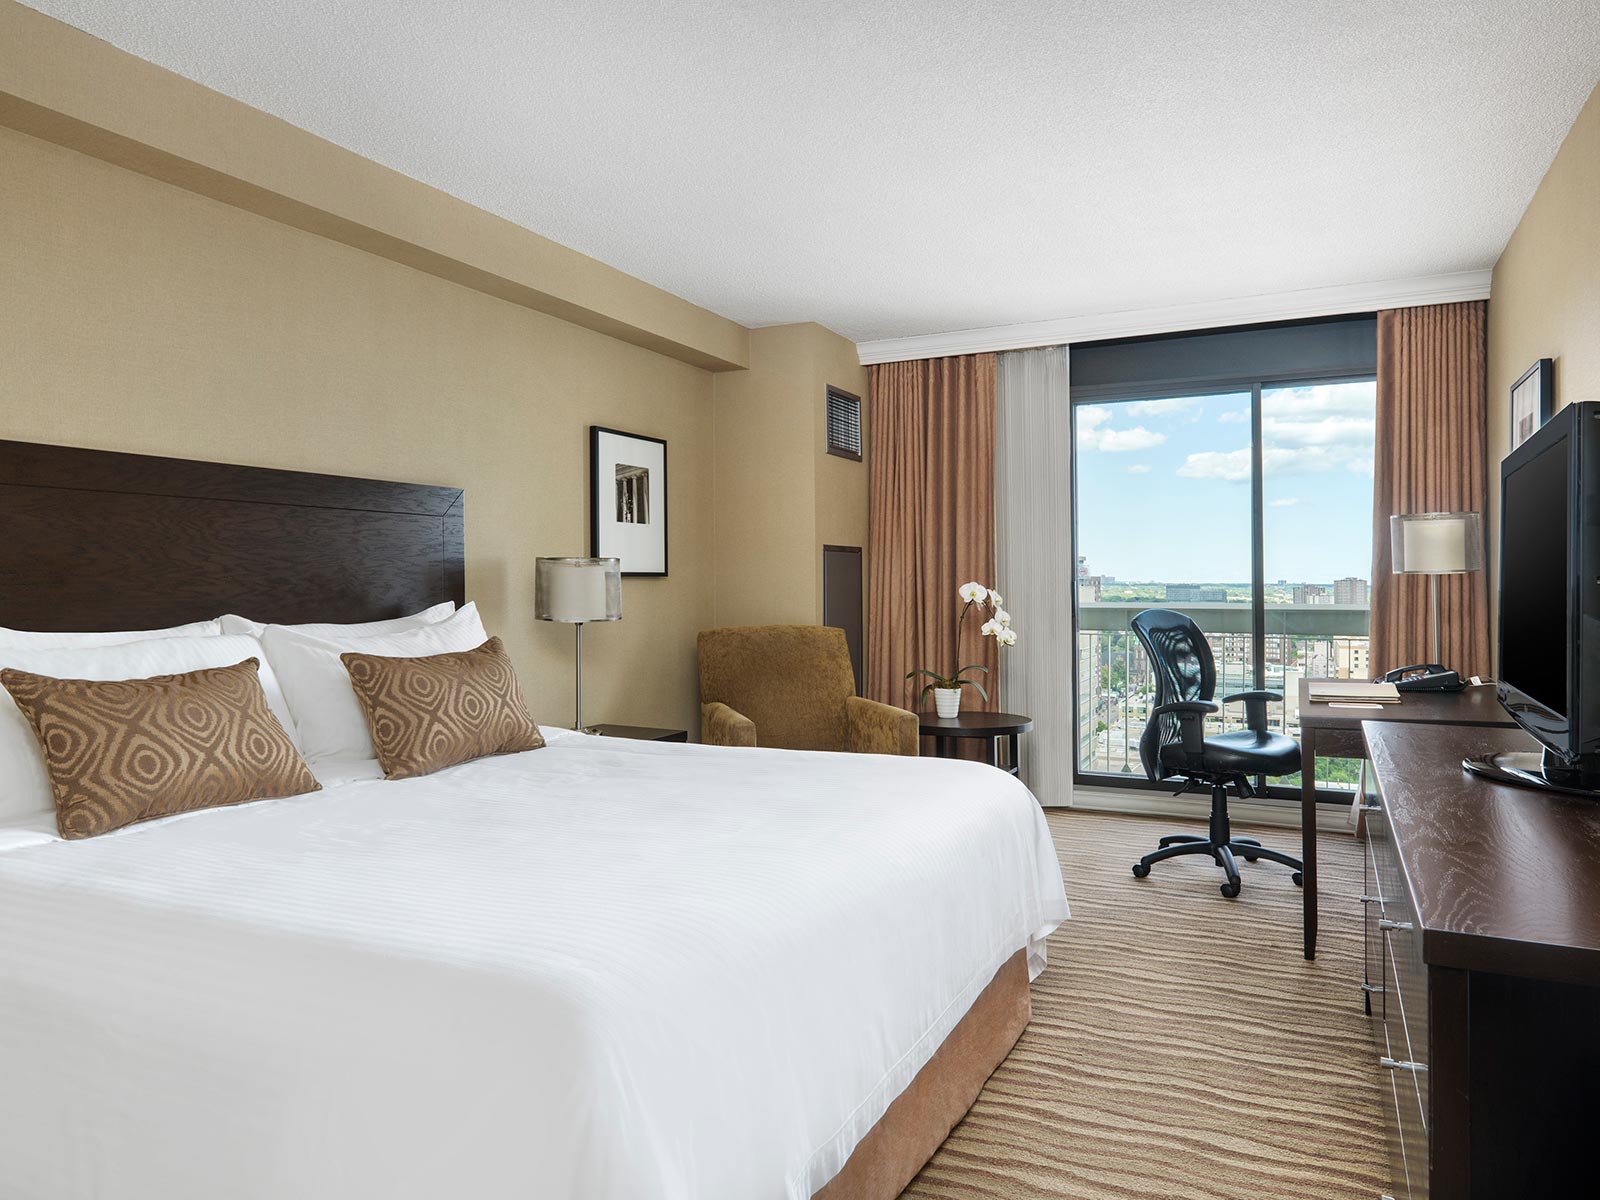 Deluxe Room, Bed and Breakfast, Hotel Deals & Offers in Chelsea Hotel, Toronto